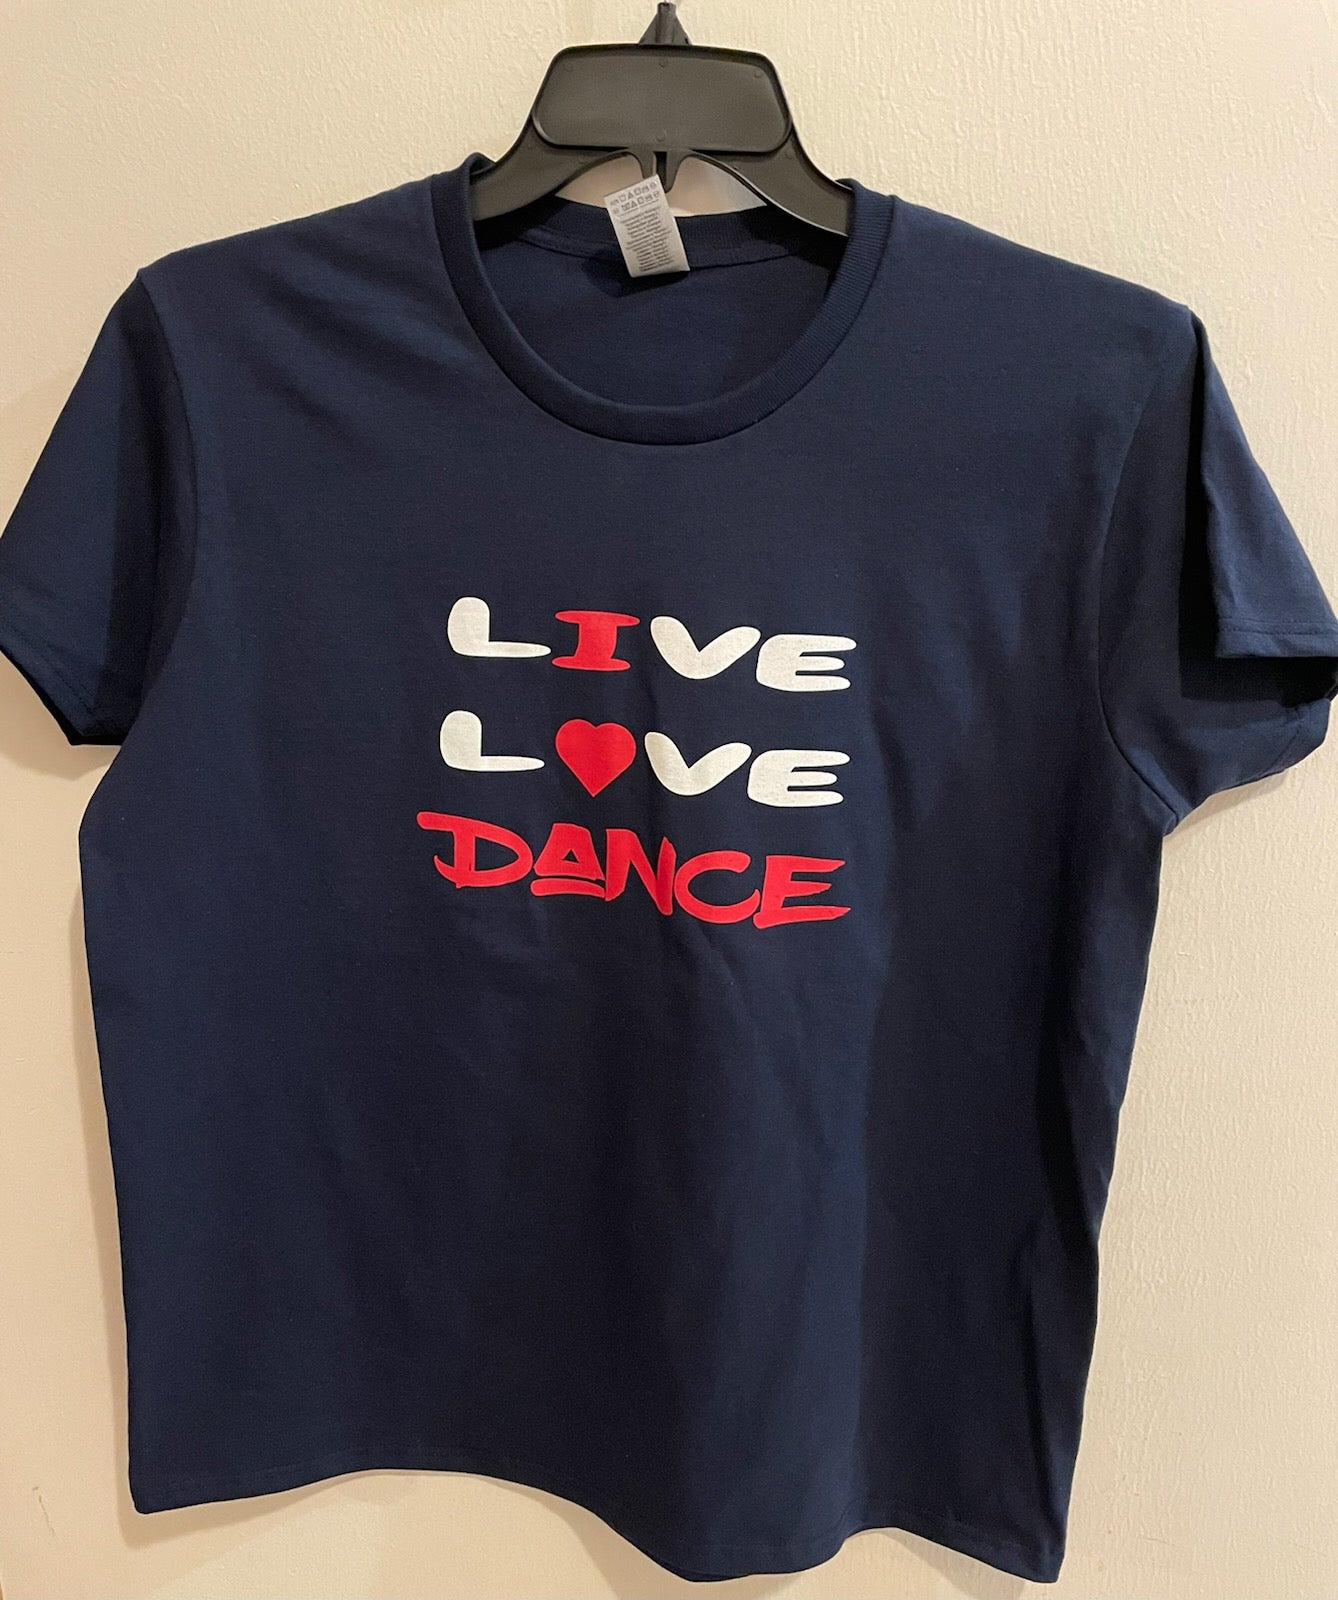 Live, Love, Dance Tshirt